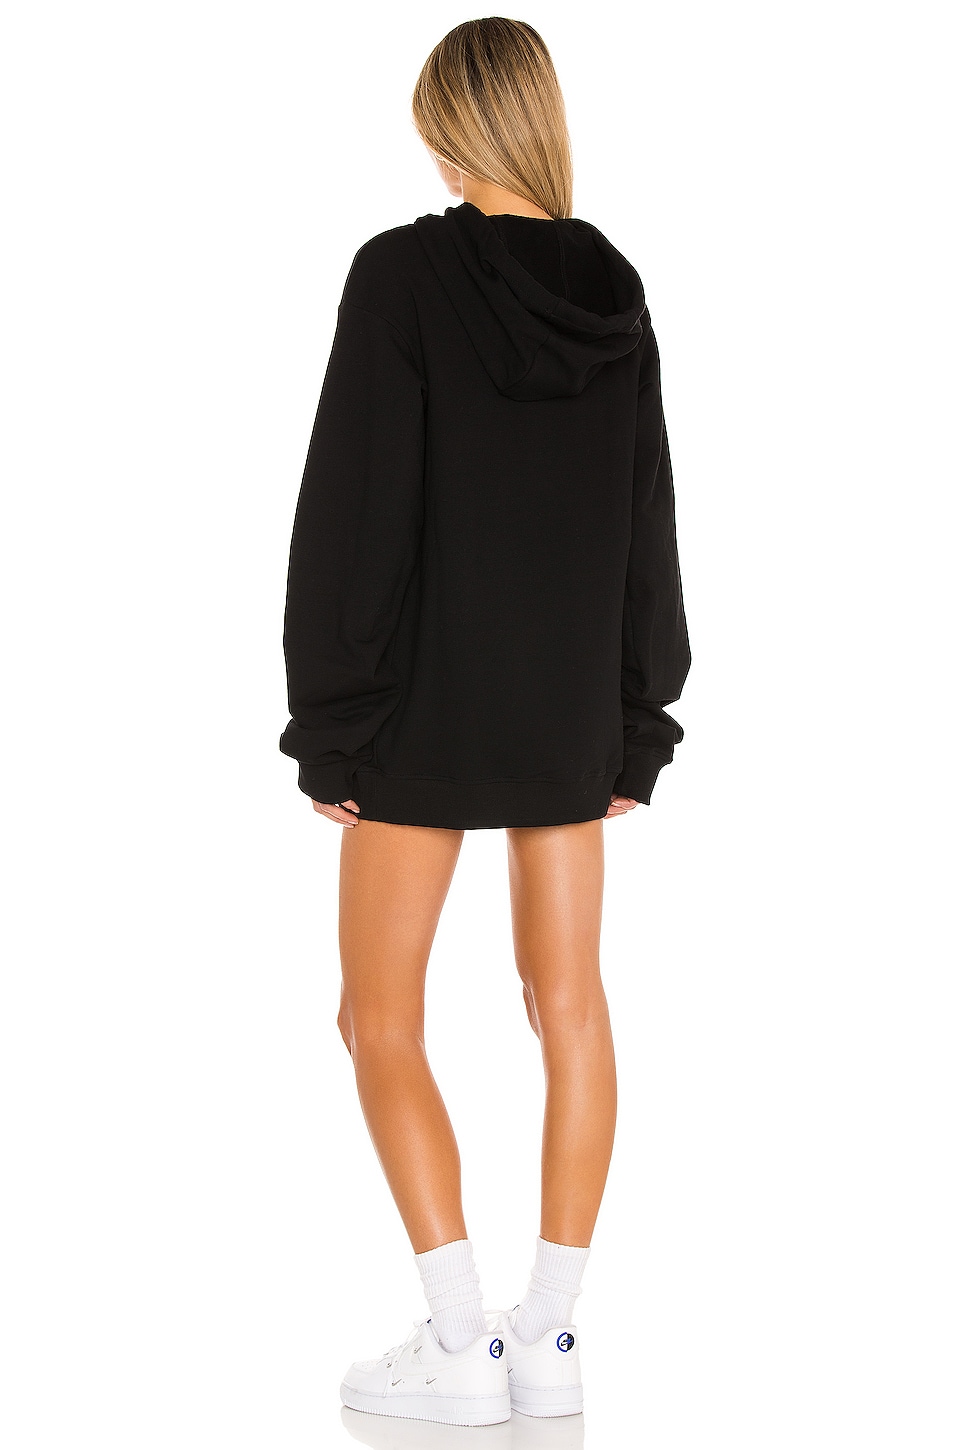 DANIELLE GUIZIO DG Oversized Hoodie Dress in Black | REVOLVE